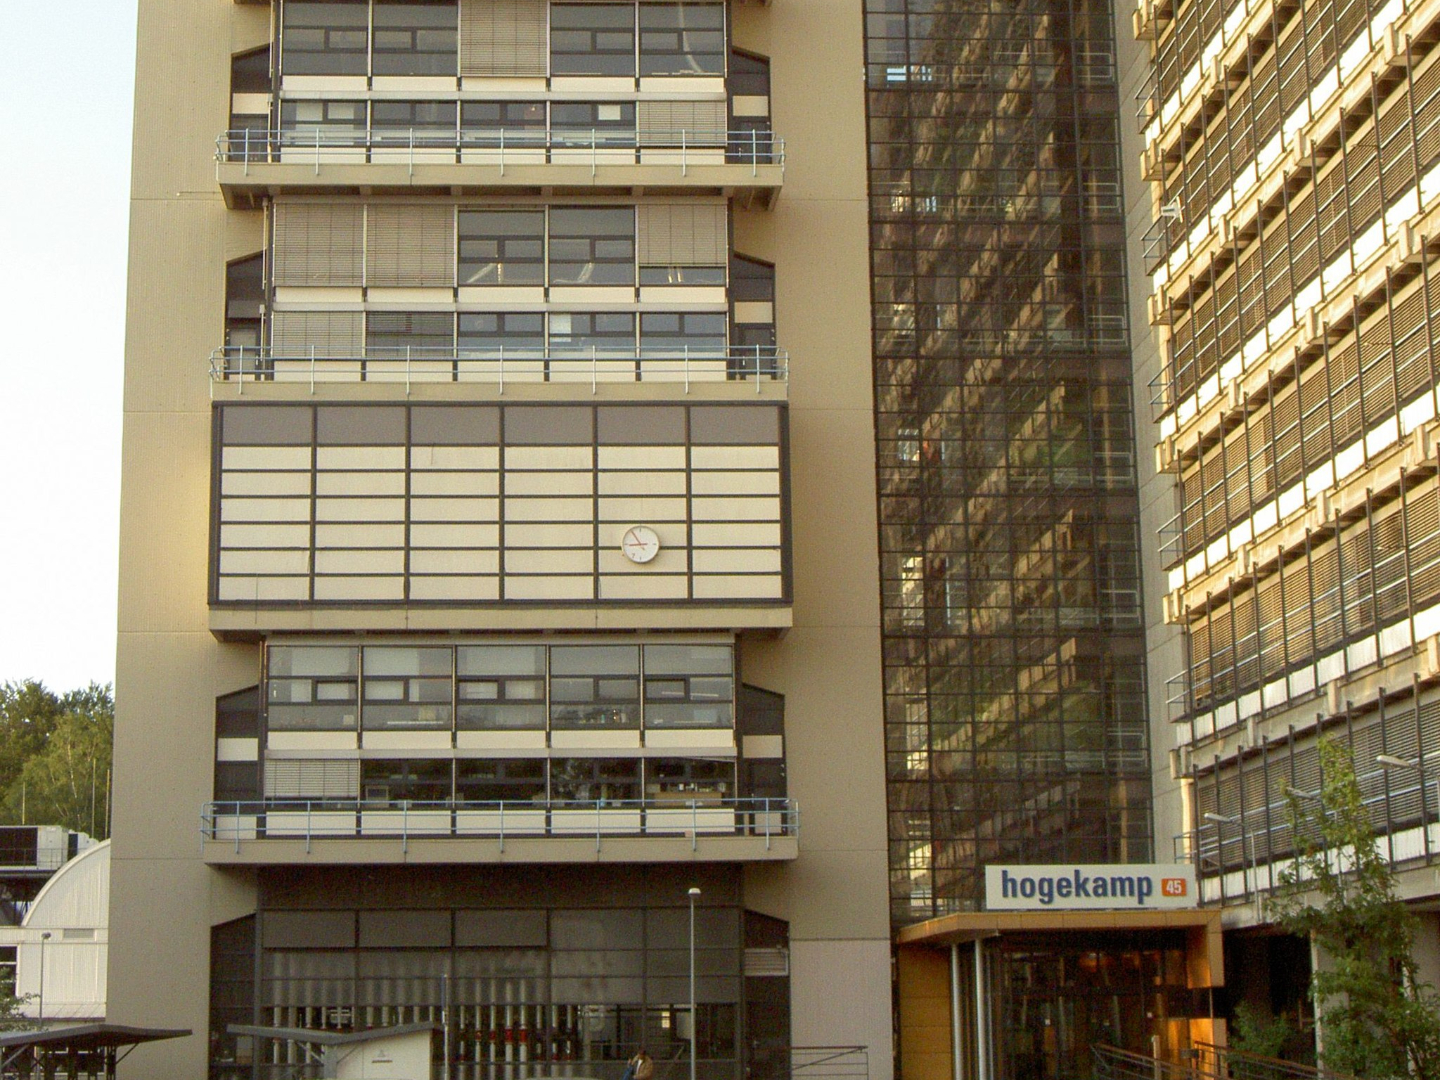 Exterior of the Hogekamp building.